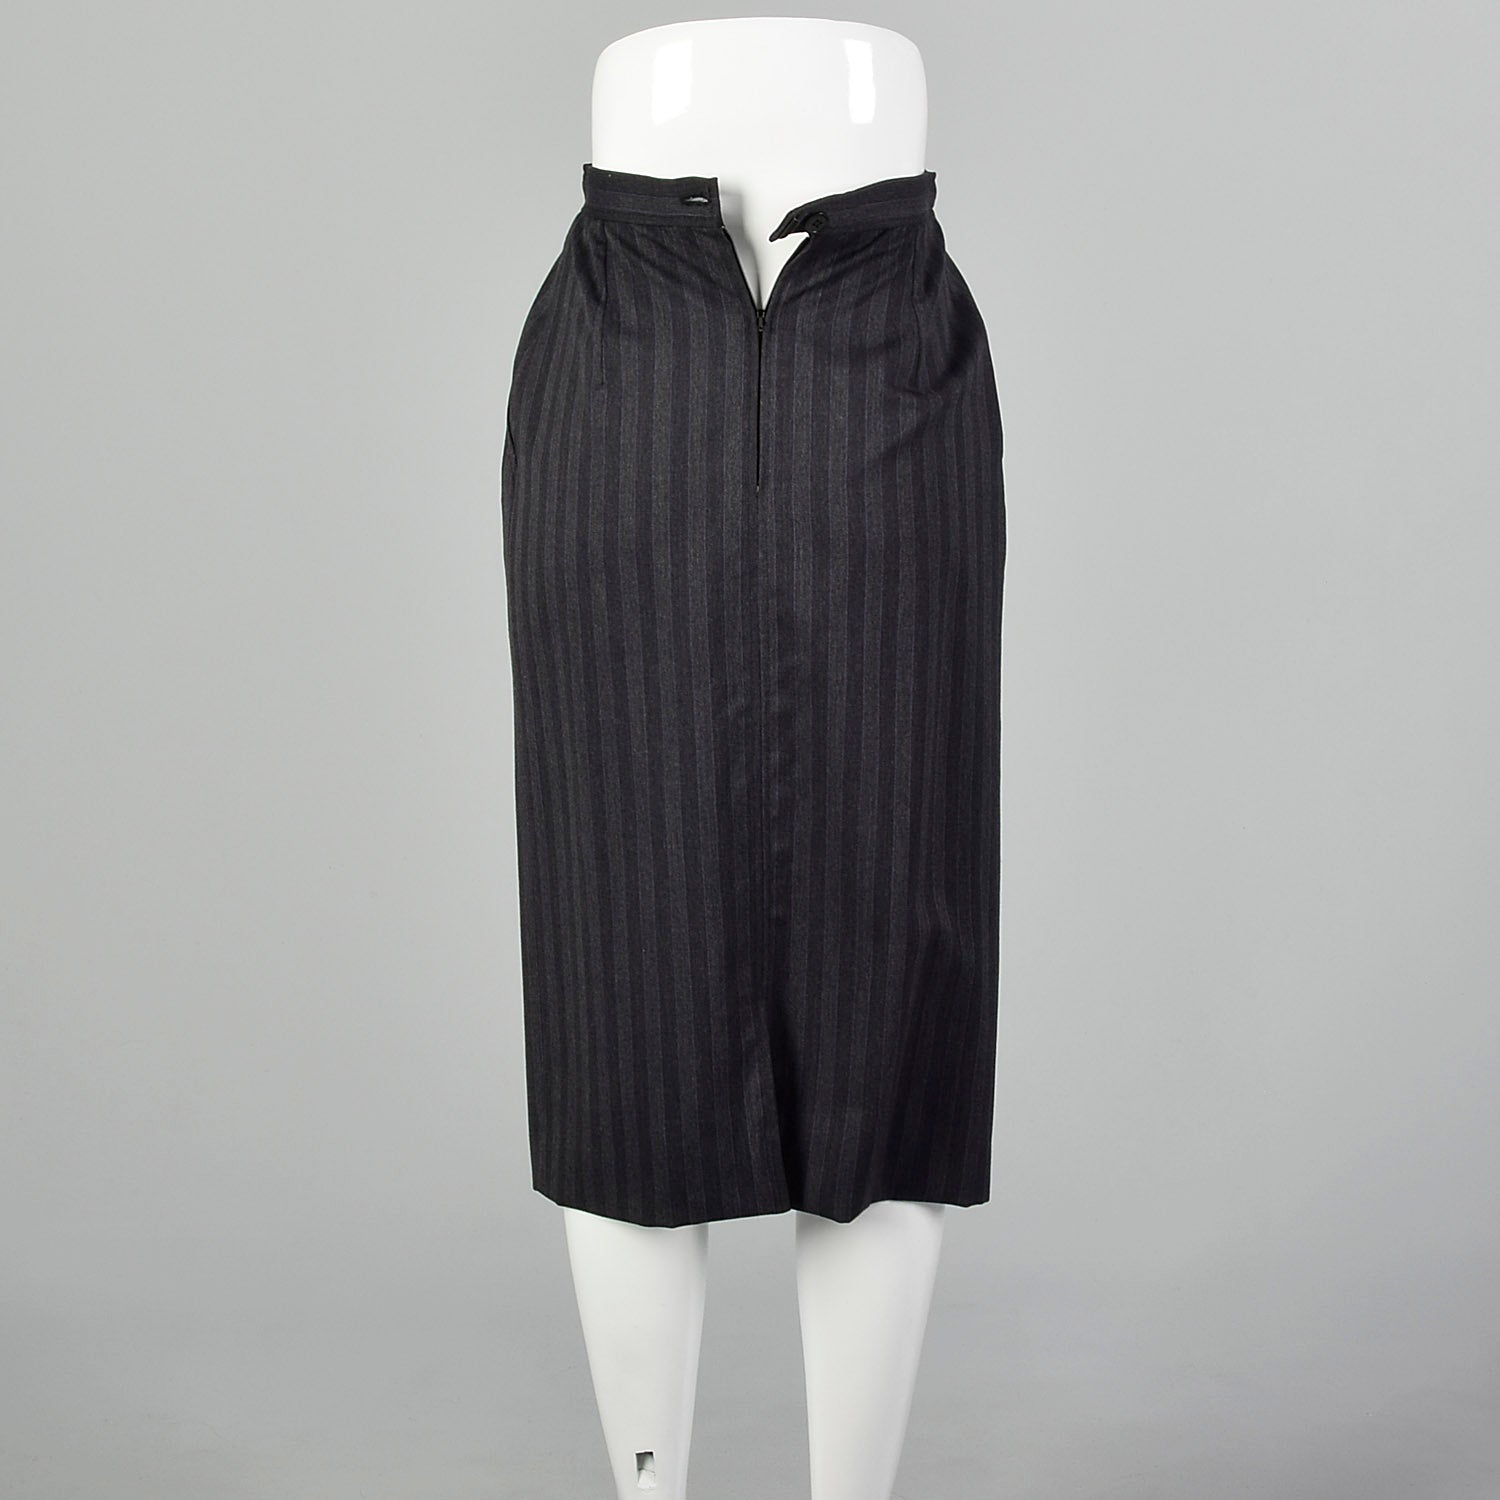 XXS Gucci 1970s Grey Pinstriped Pencil Skirt